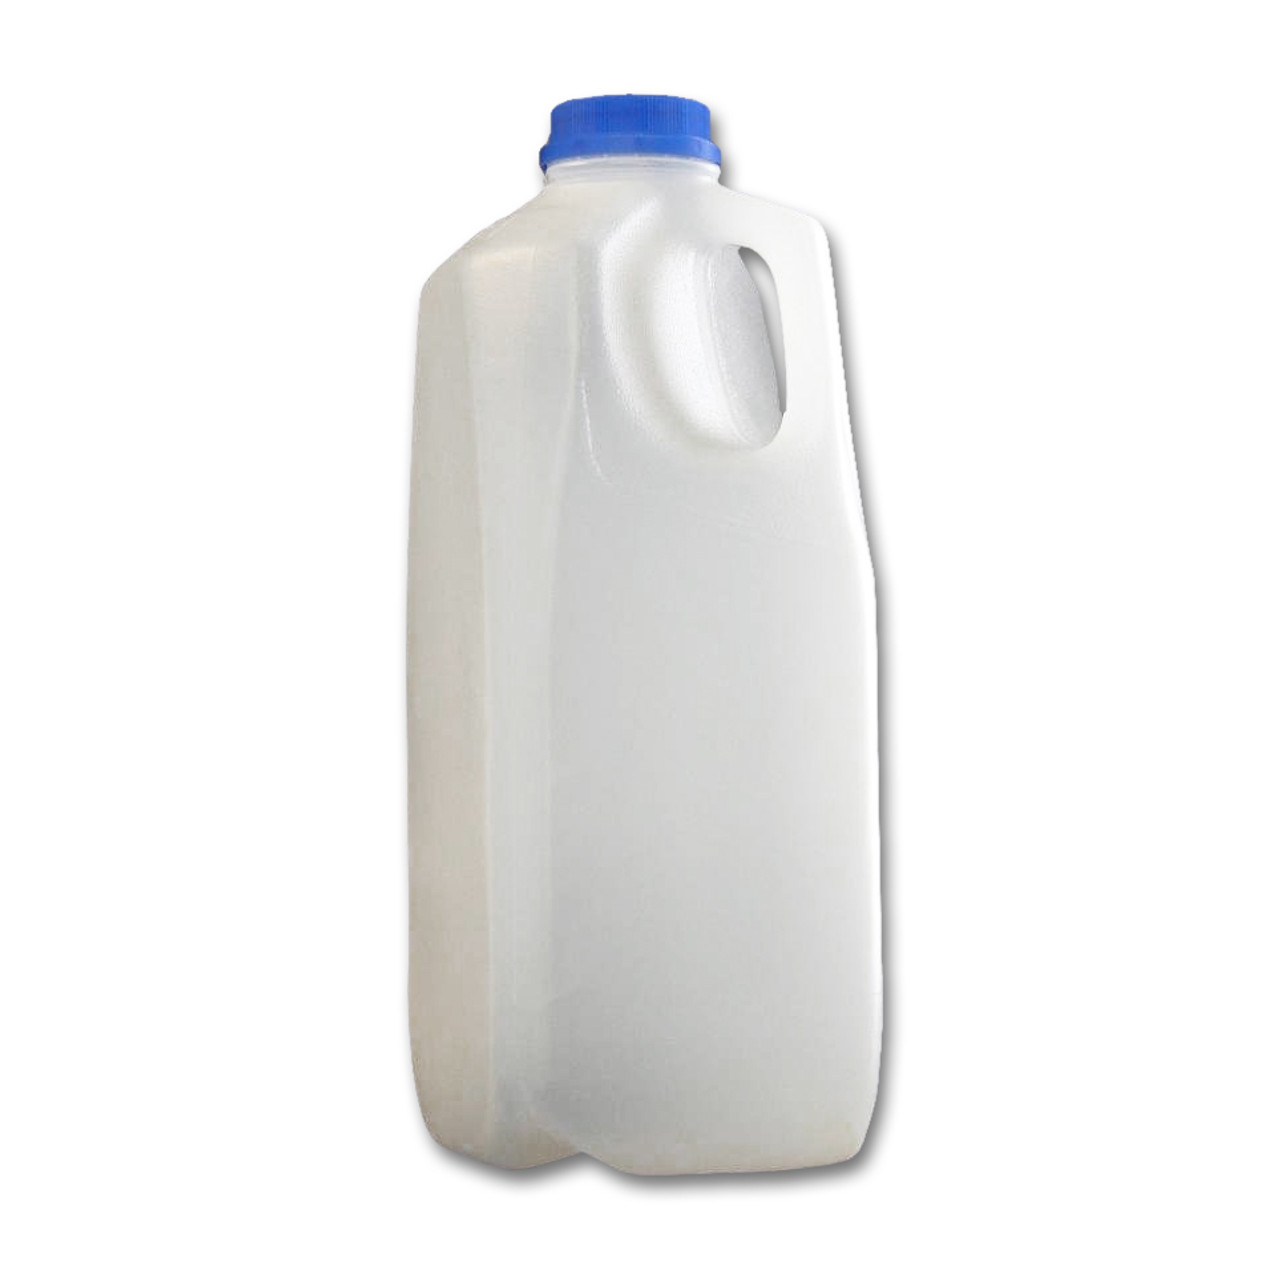 Dairy jug with lug finish